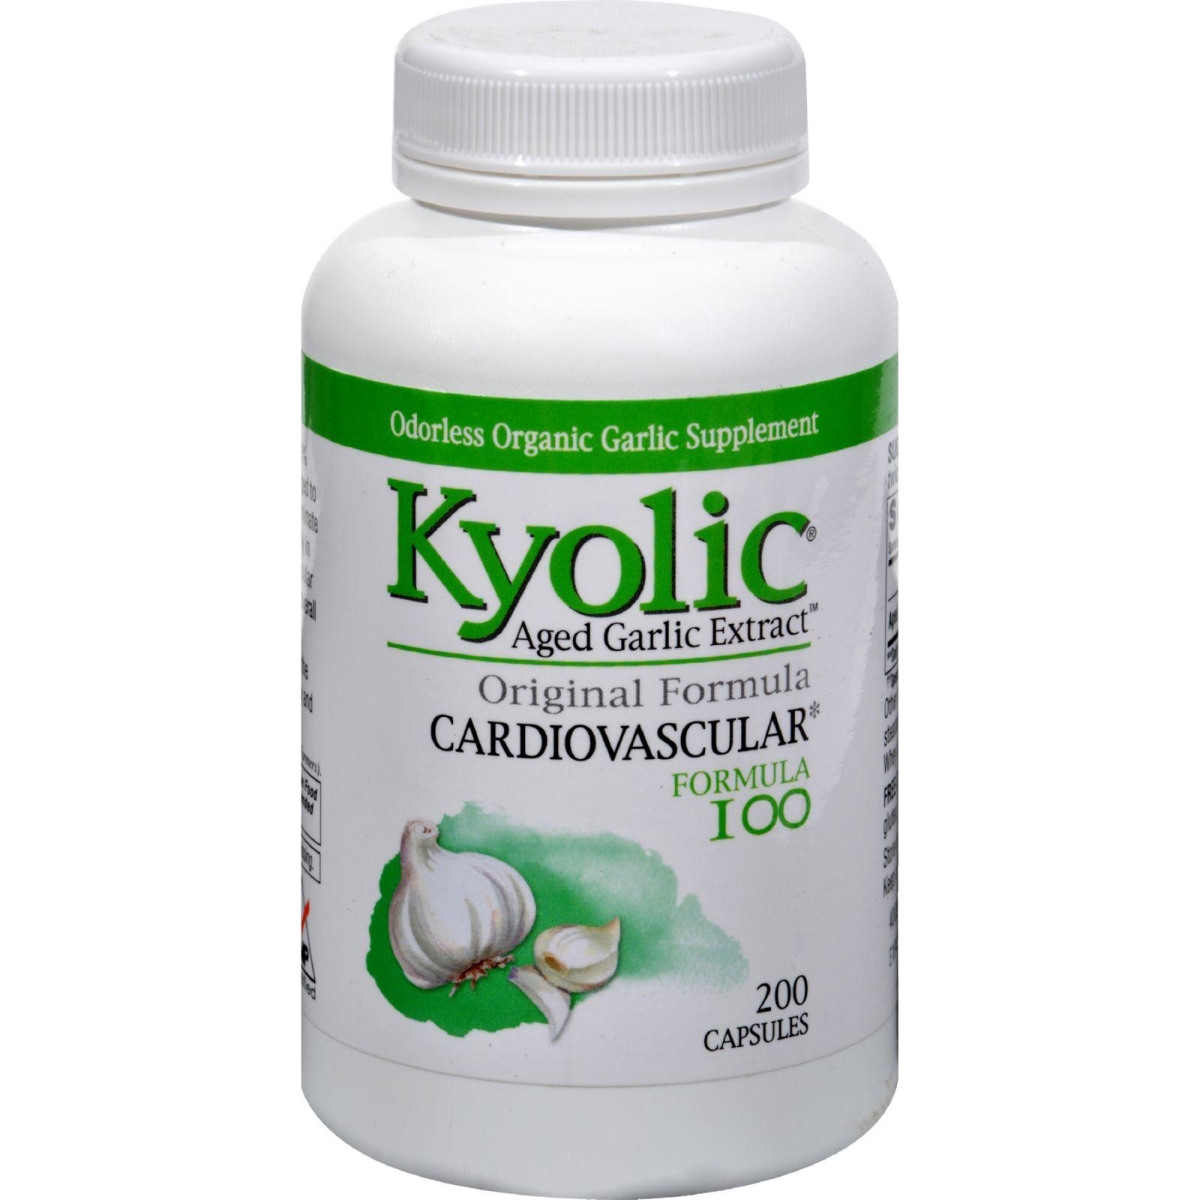 Hg0469502 Aged Garlic Extract Cardiovascular Formula 100 - 200 Capsules